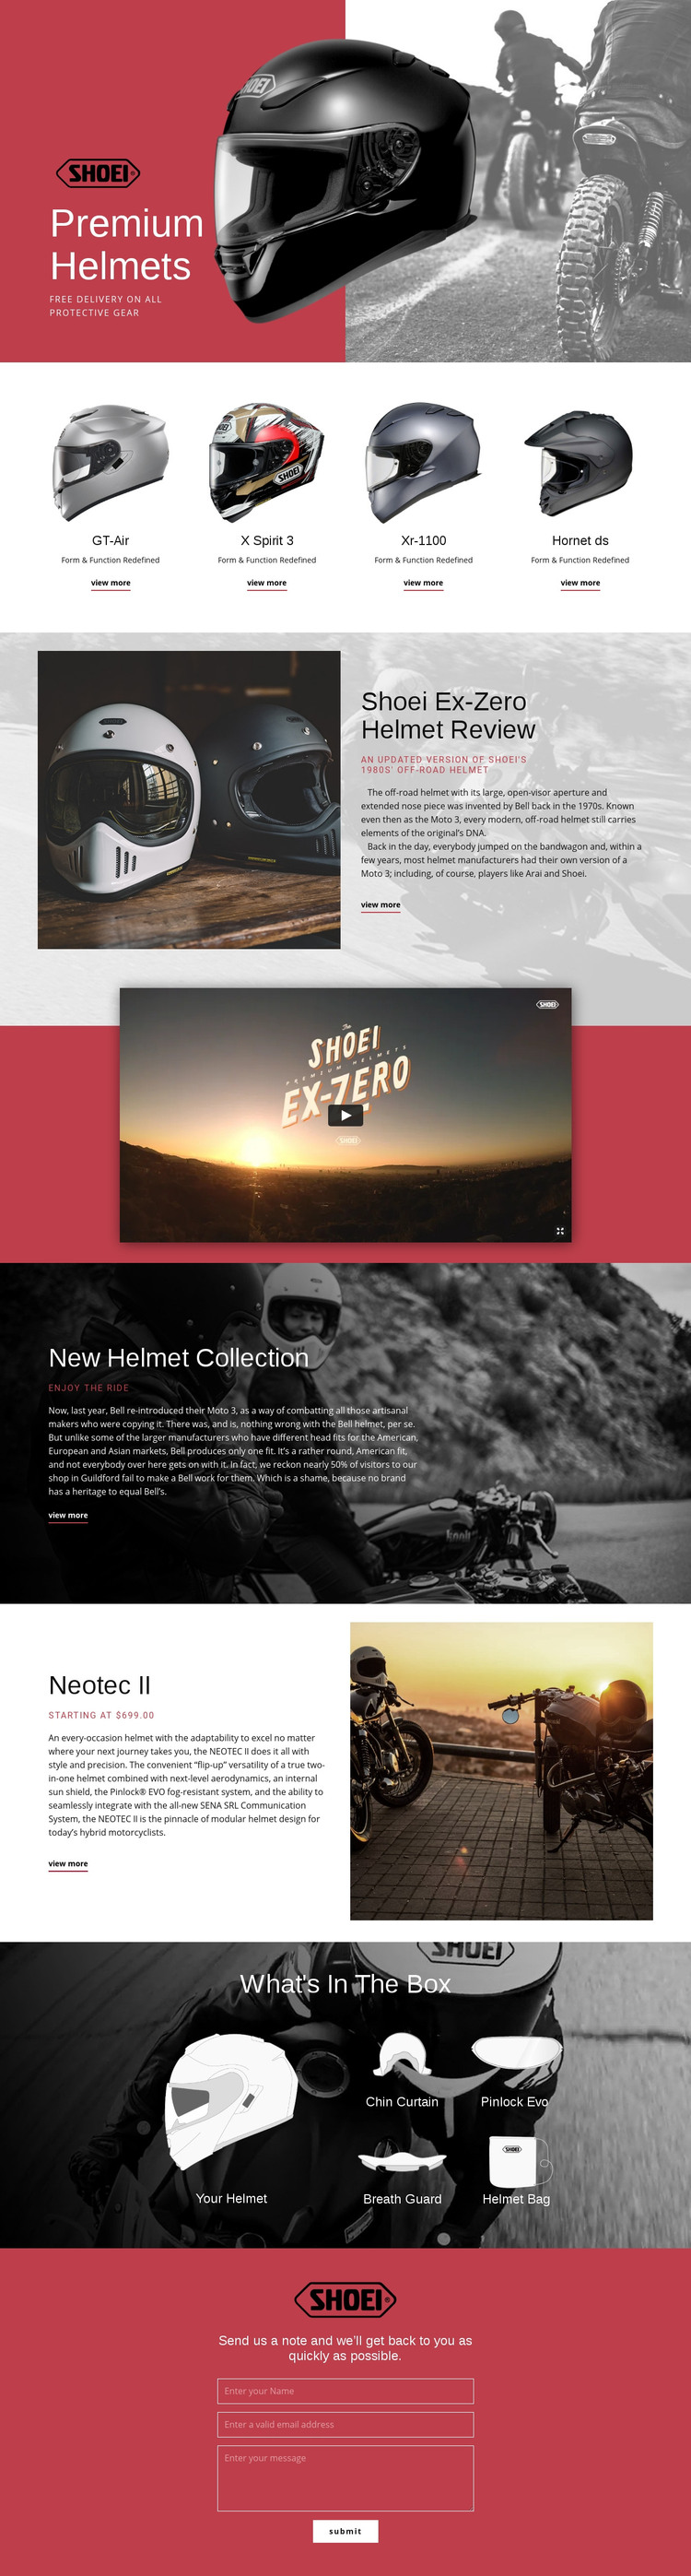 Premium Helmets Homepage Design